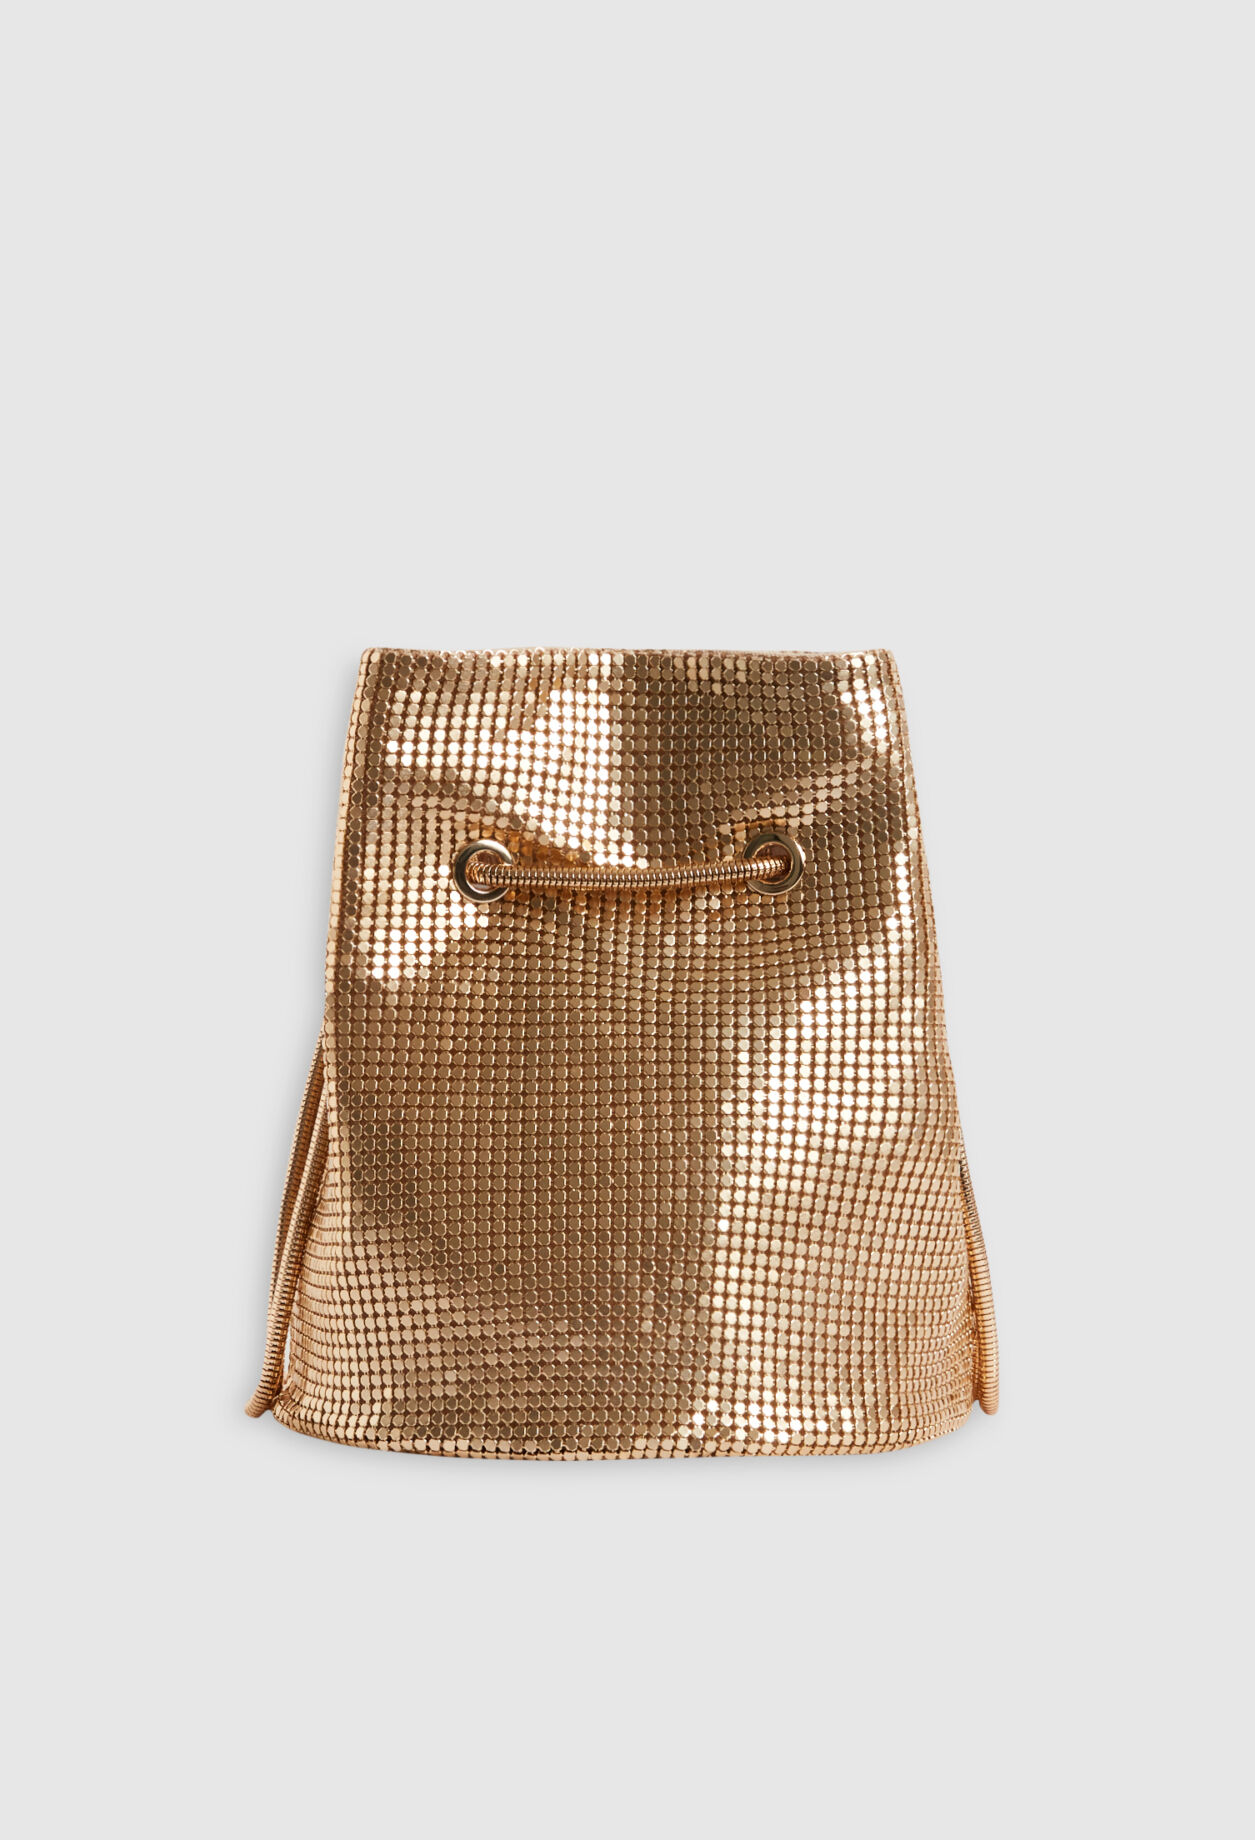 Golden chain mail bag